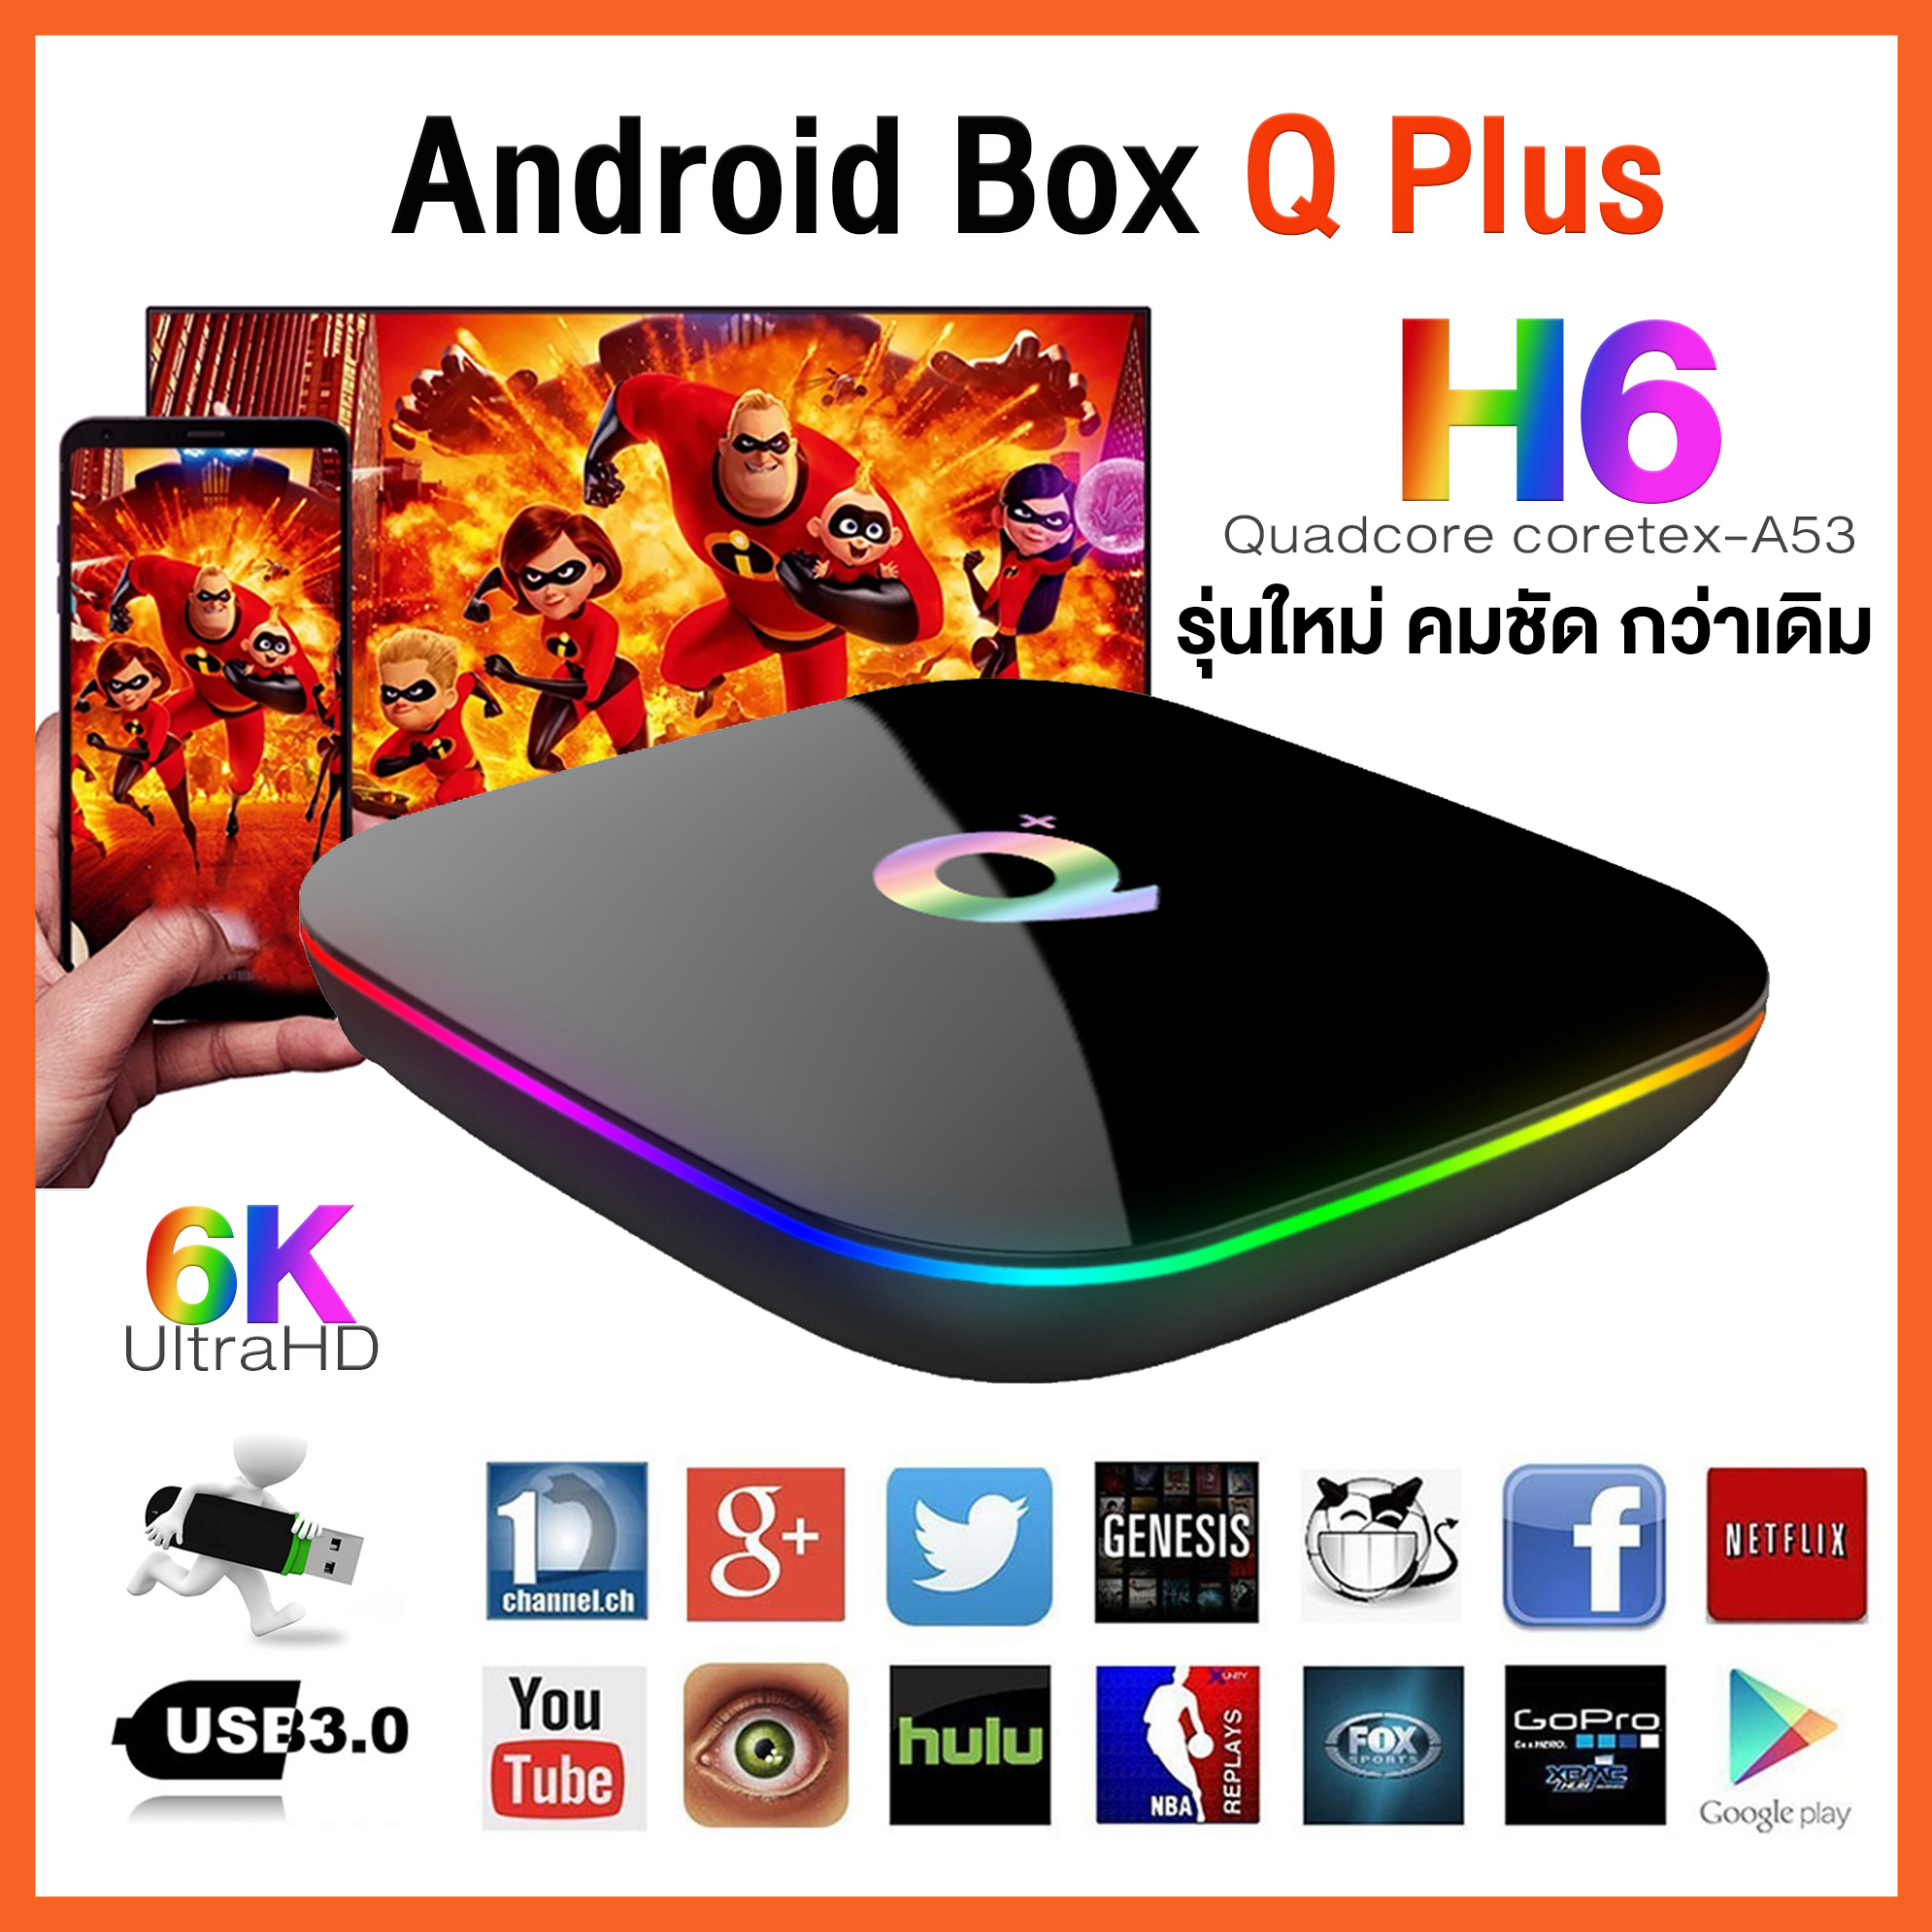 Android box Q Plus กล่องแอนดรอย Android 9.0 tv box